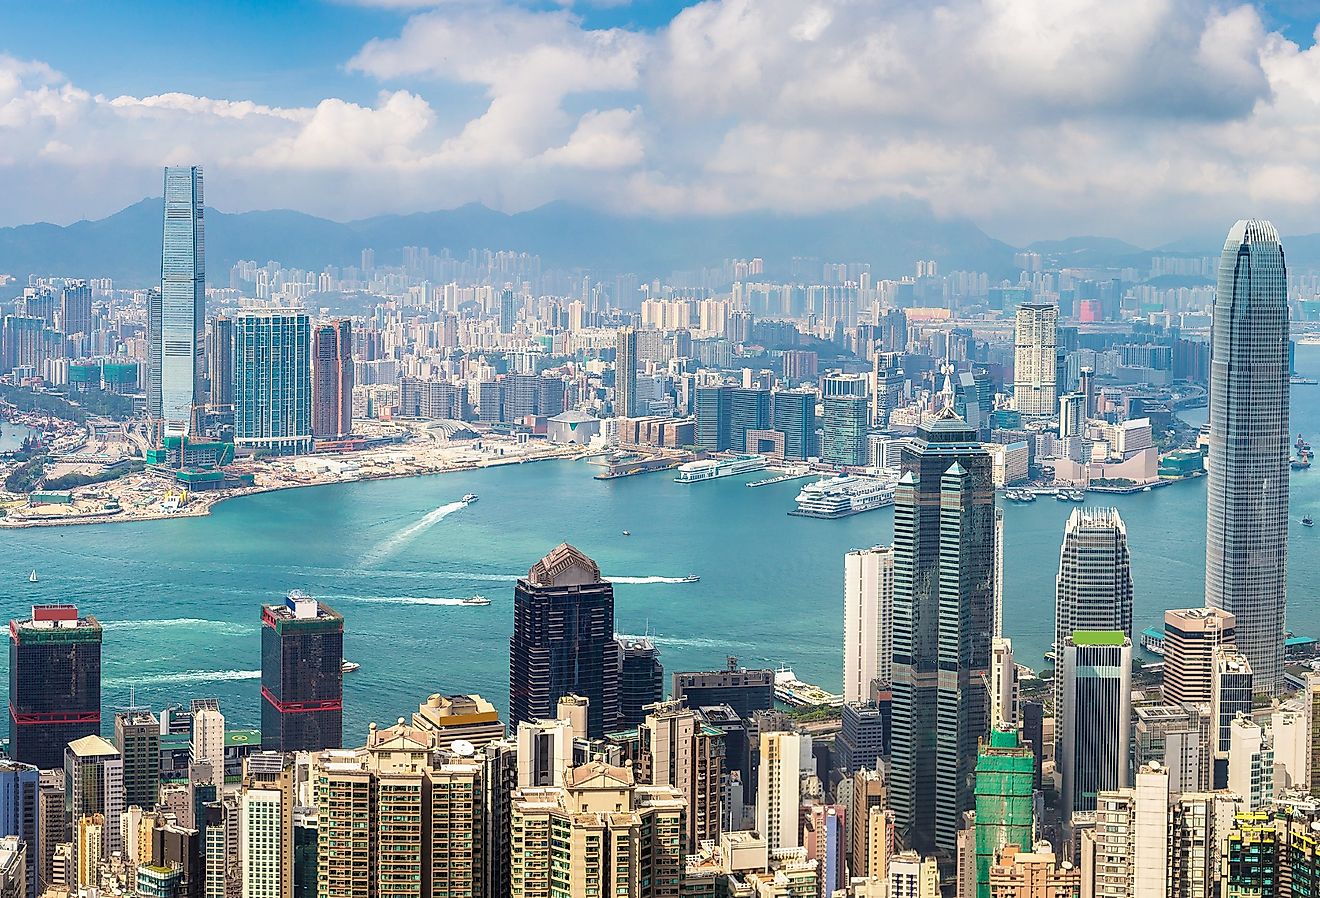 Panoramic view of skyscrapers in Hong Kong, China.